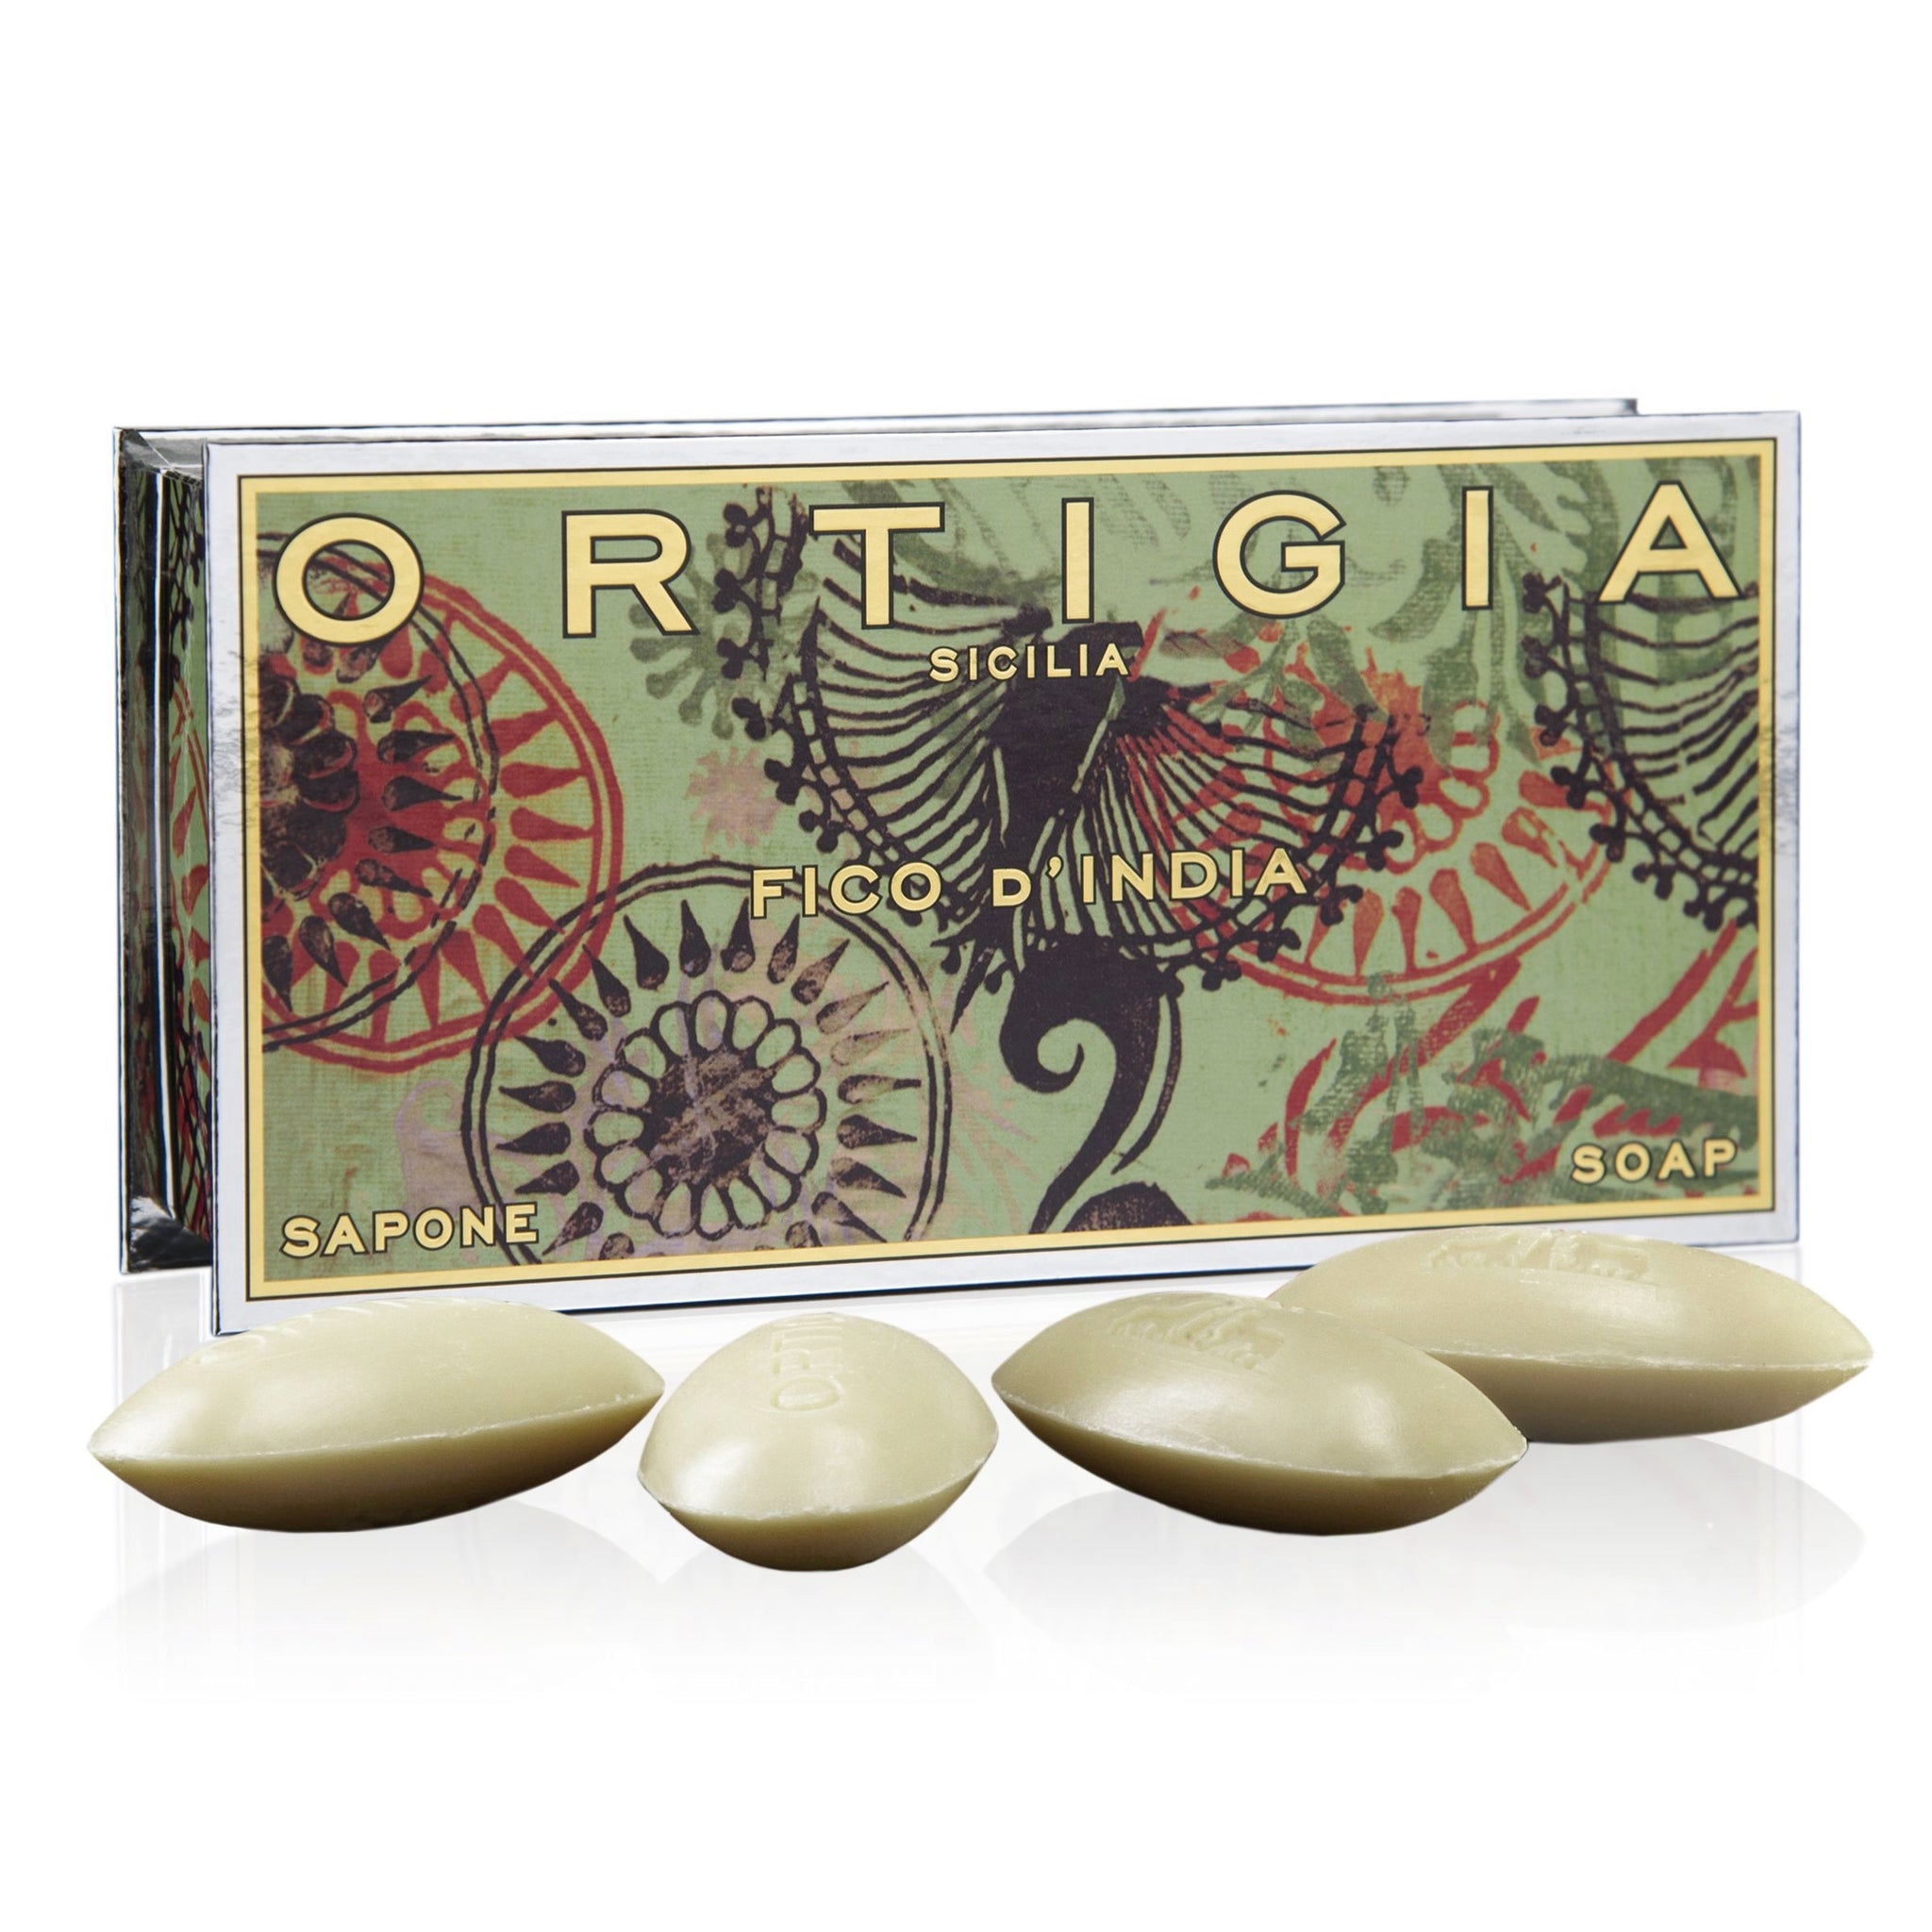 Ortigia Fico D’India Olive Oil Soap | Small Boxed Set of 40g x 4